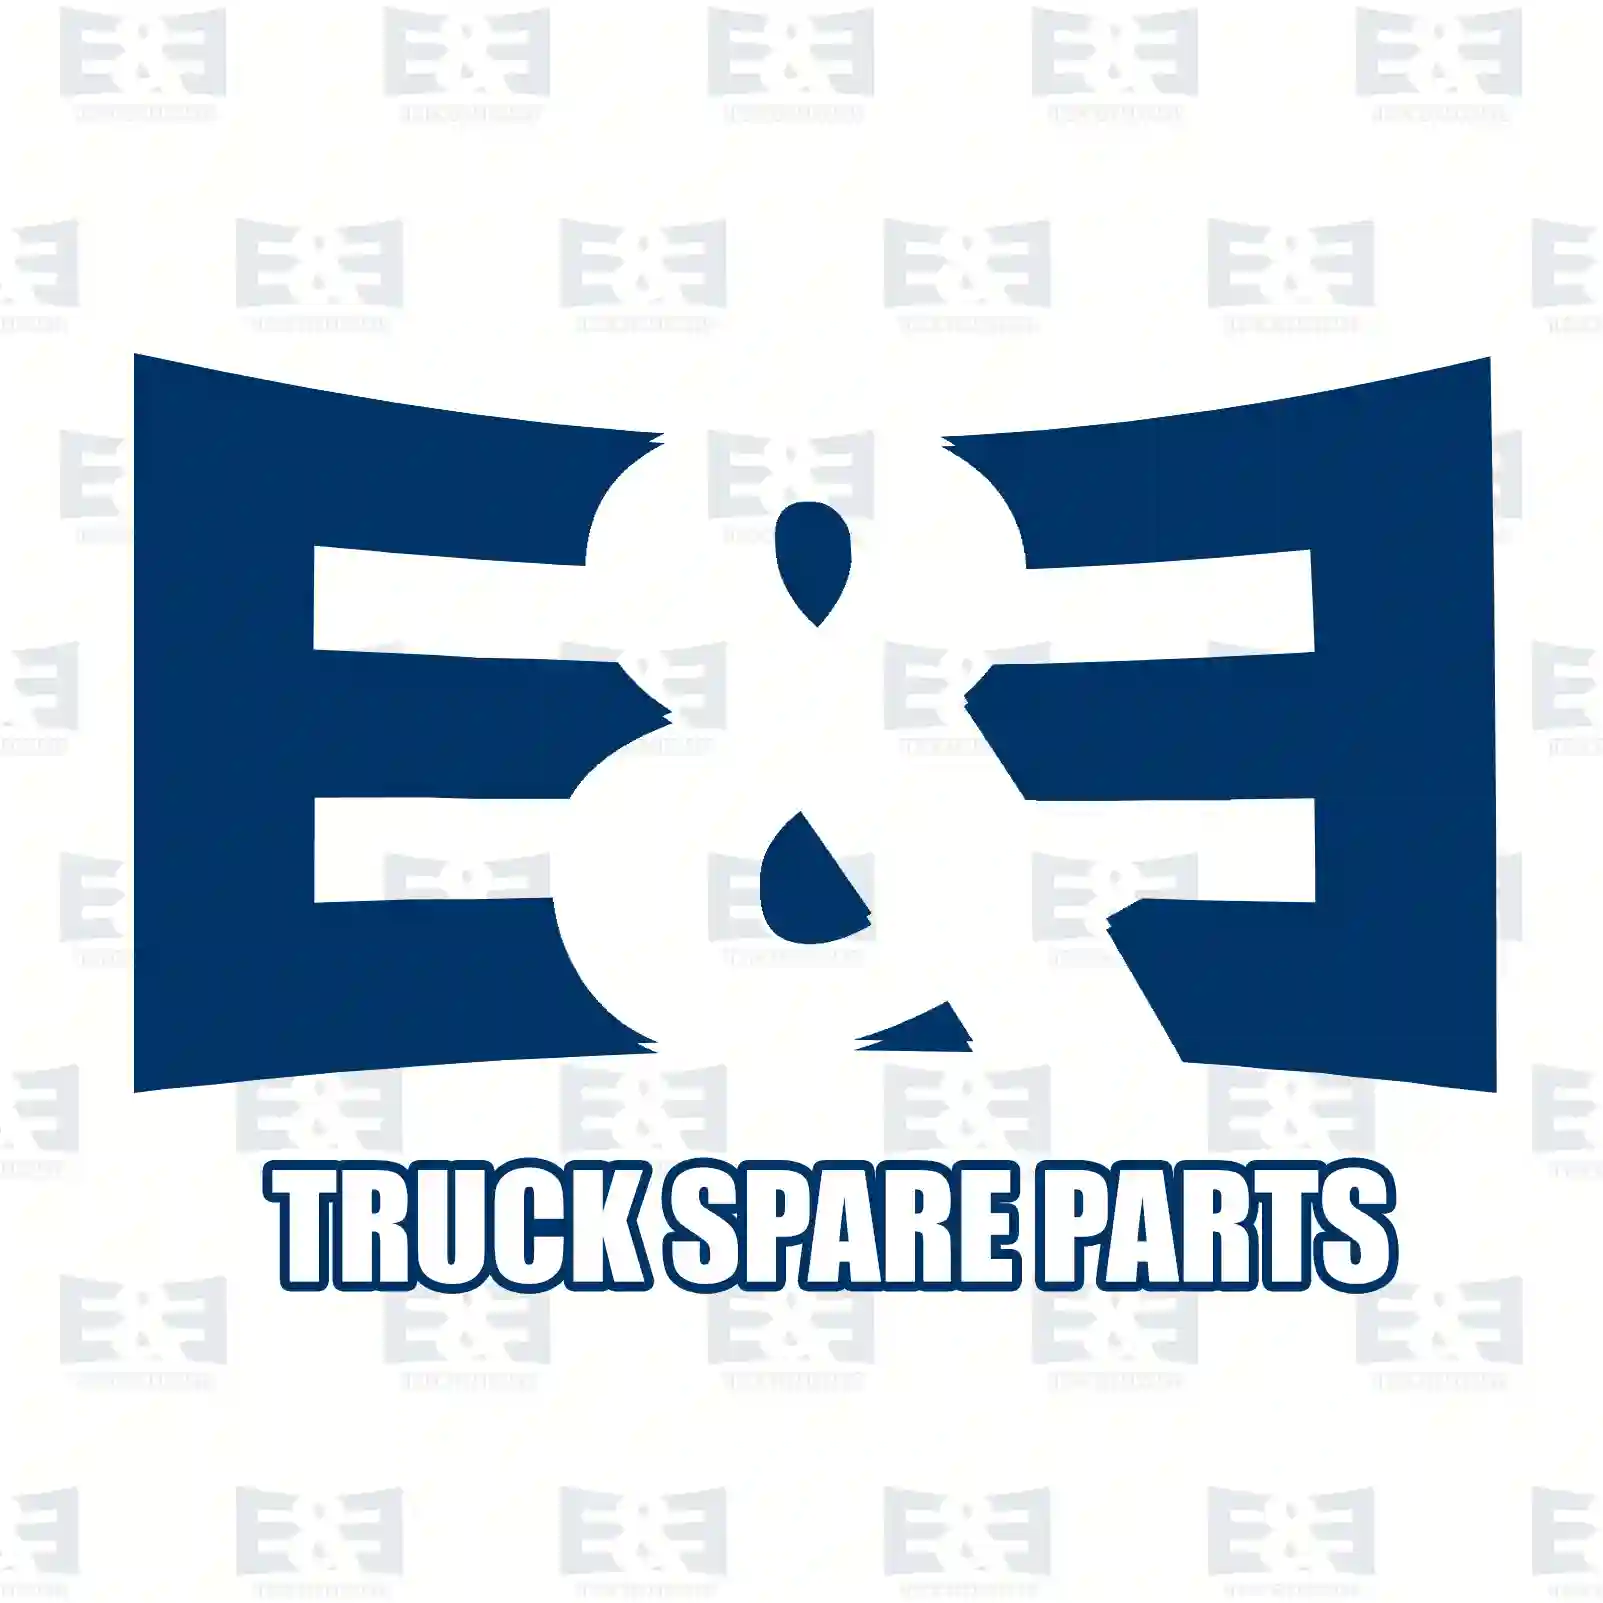 Drive Hydraulic pump, fan, EE No 2E2202952 ,  oem no:1764450, 470937, ZG00452-0008 E&E Truck Spare Parts | Truck Spare Parts, Auotomotive Spare Parts